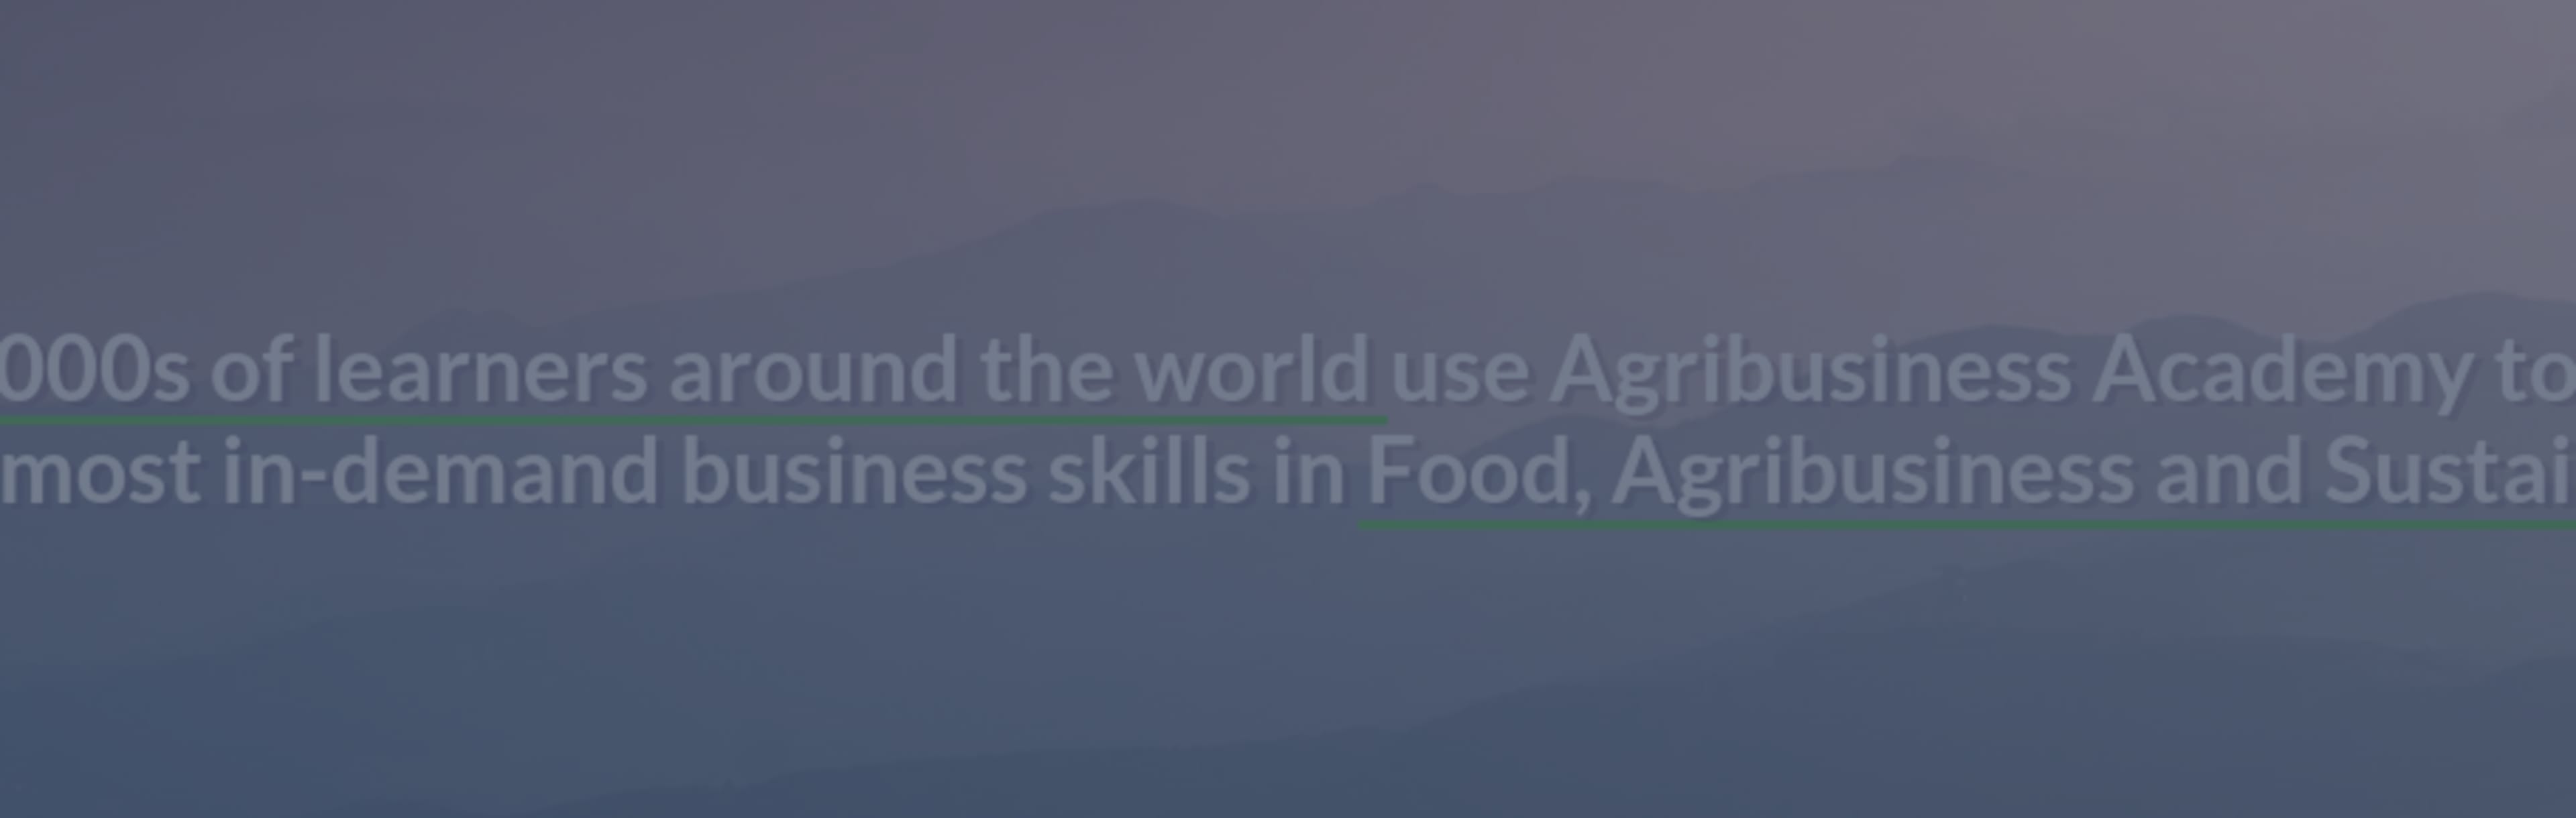 Agribusiness Academy